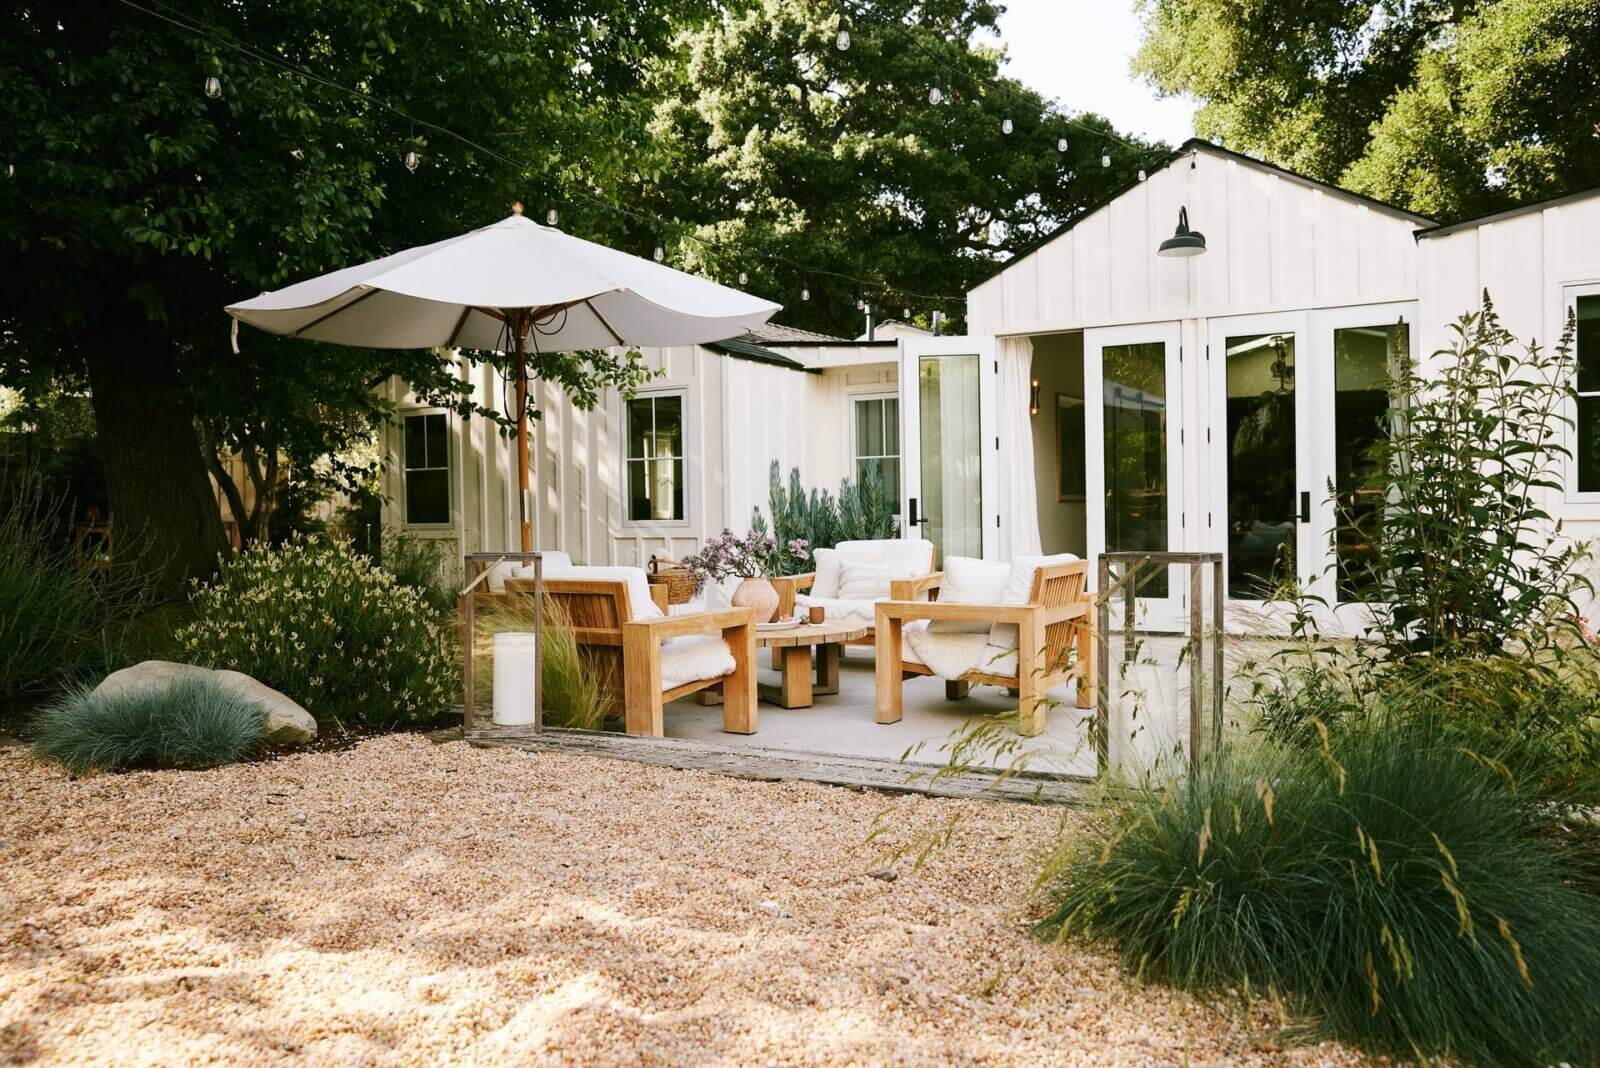 Modern farmhouse backyard with gravel near outdoor lounge area with umbrella